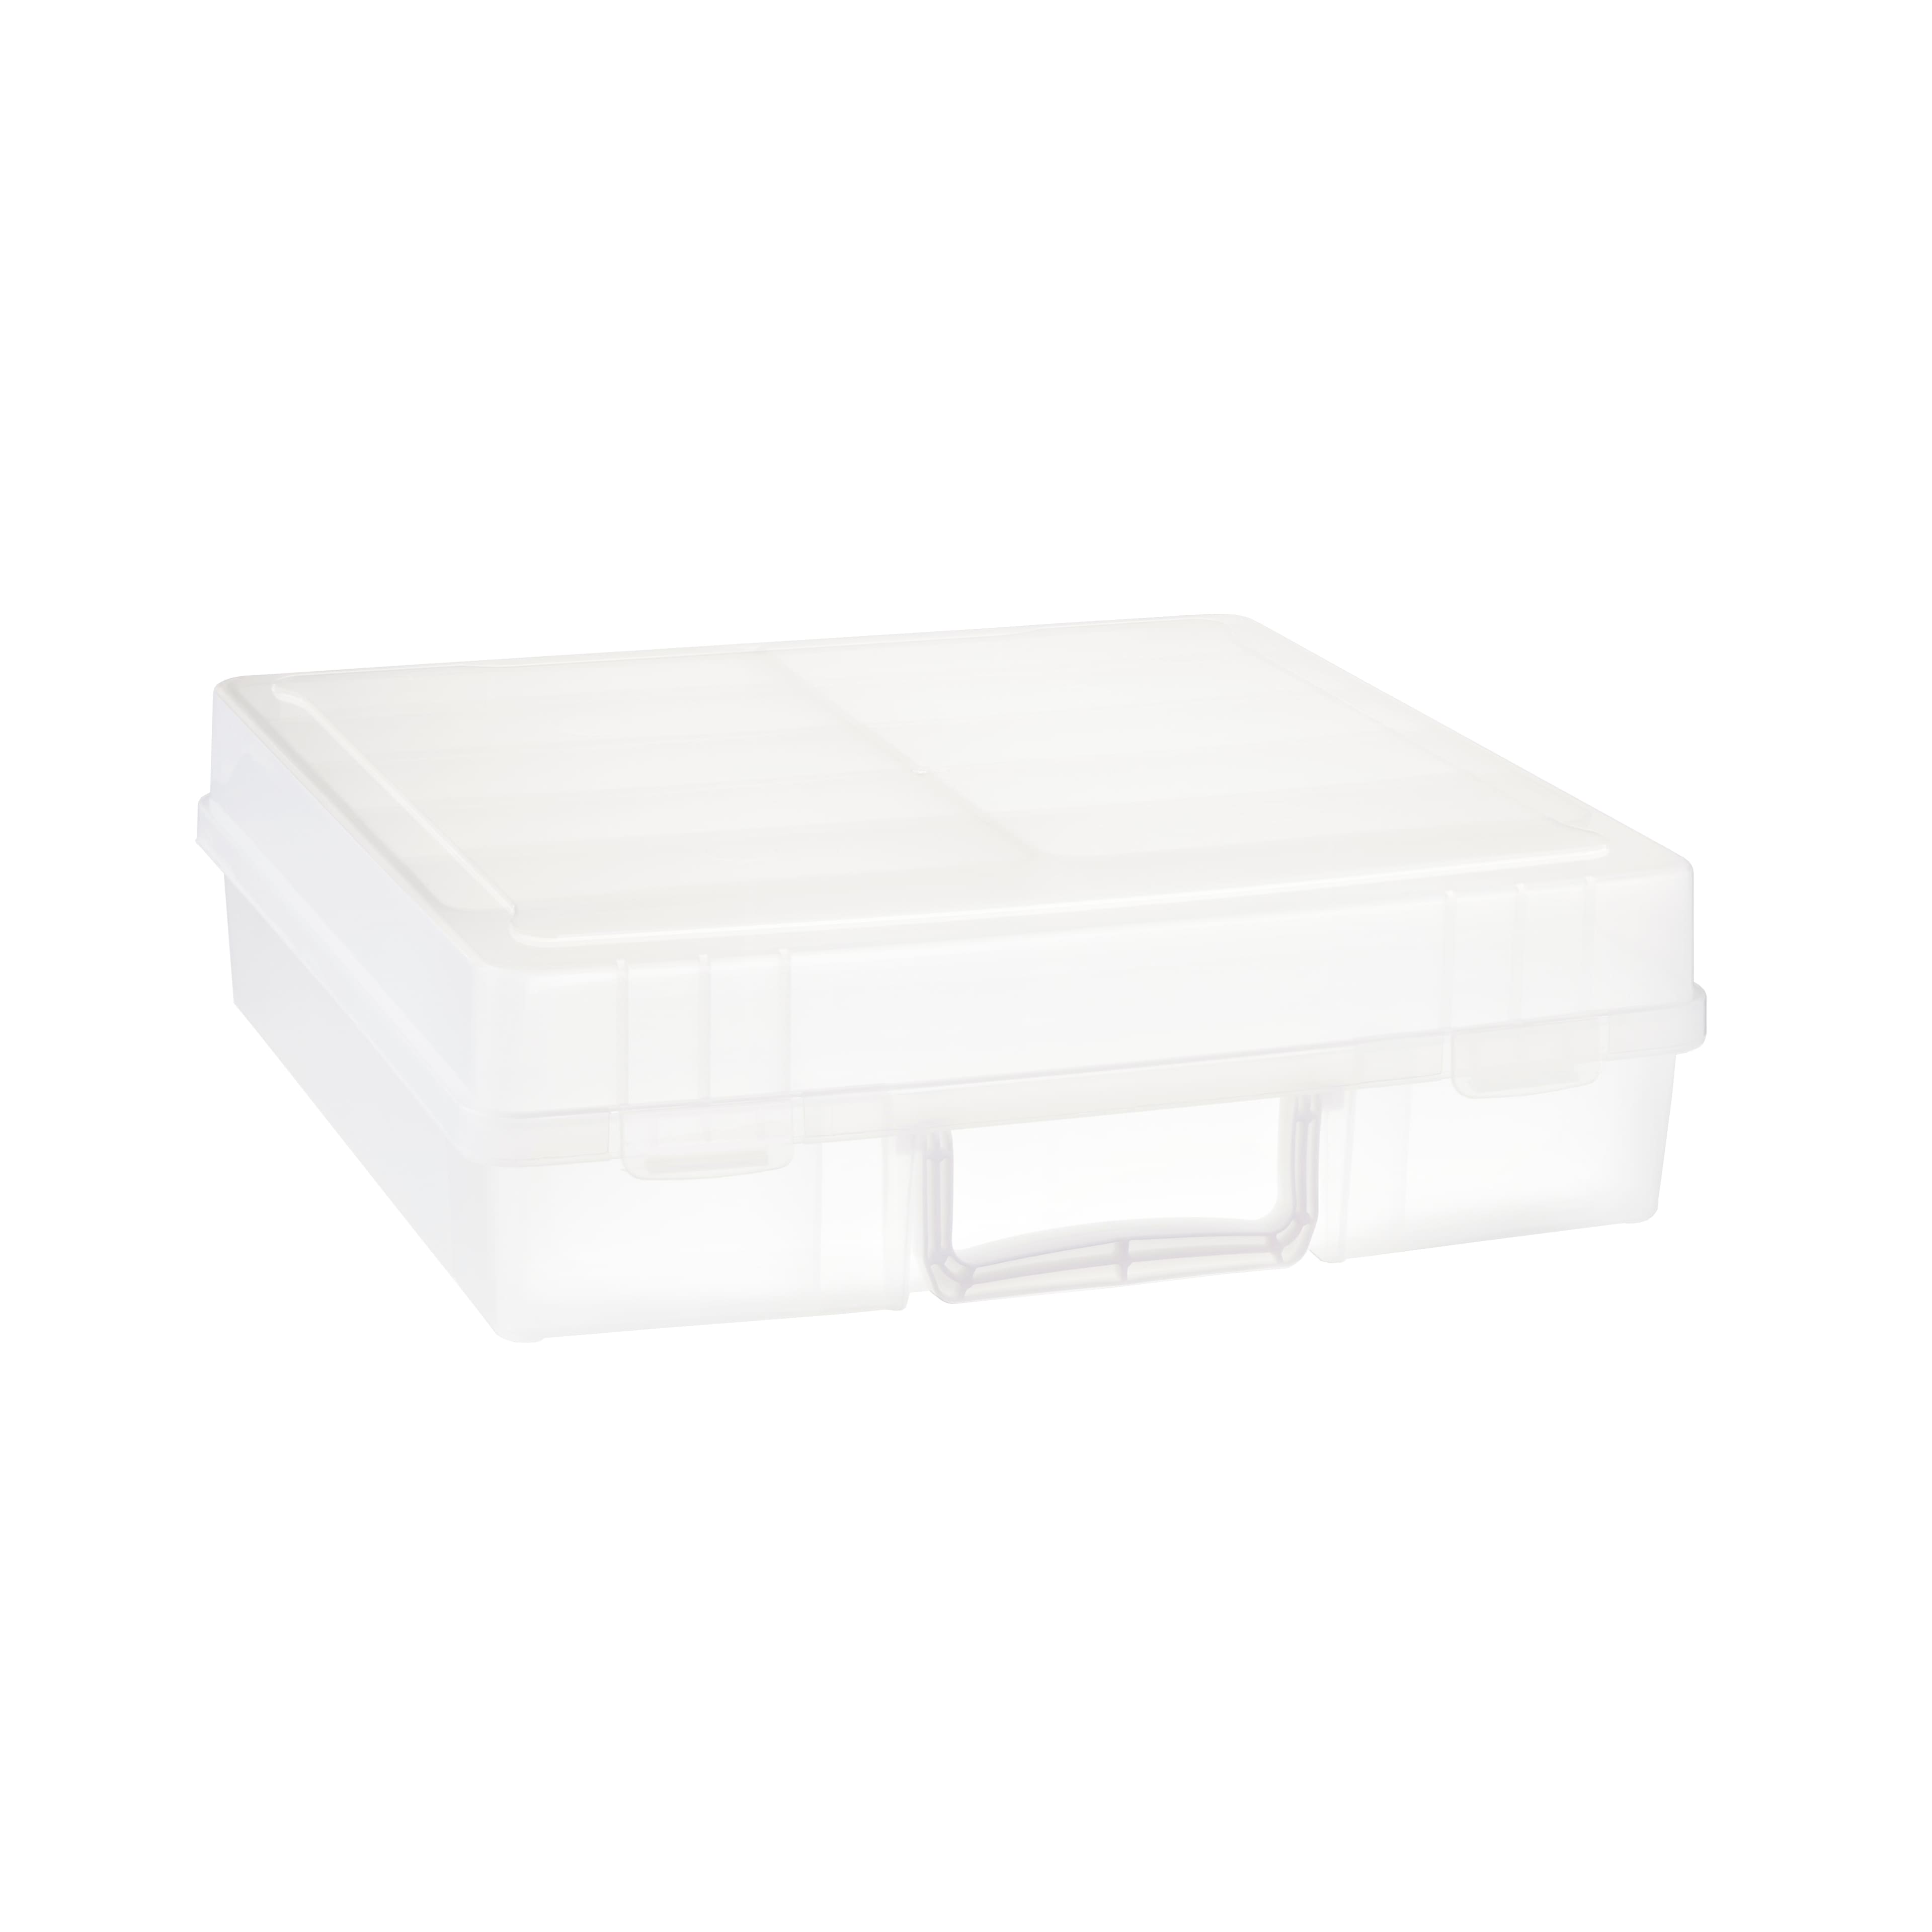 Deflecto Washi Tape Storage Cube-Clear, 10Wx7Hx6.8D 350901CR -  GettyCrafts